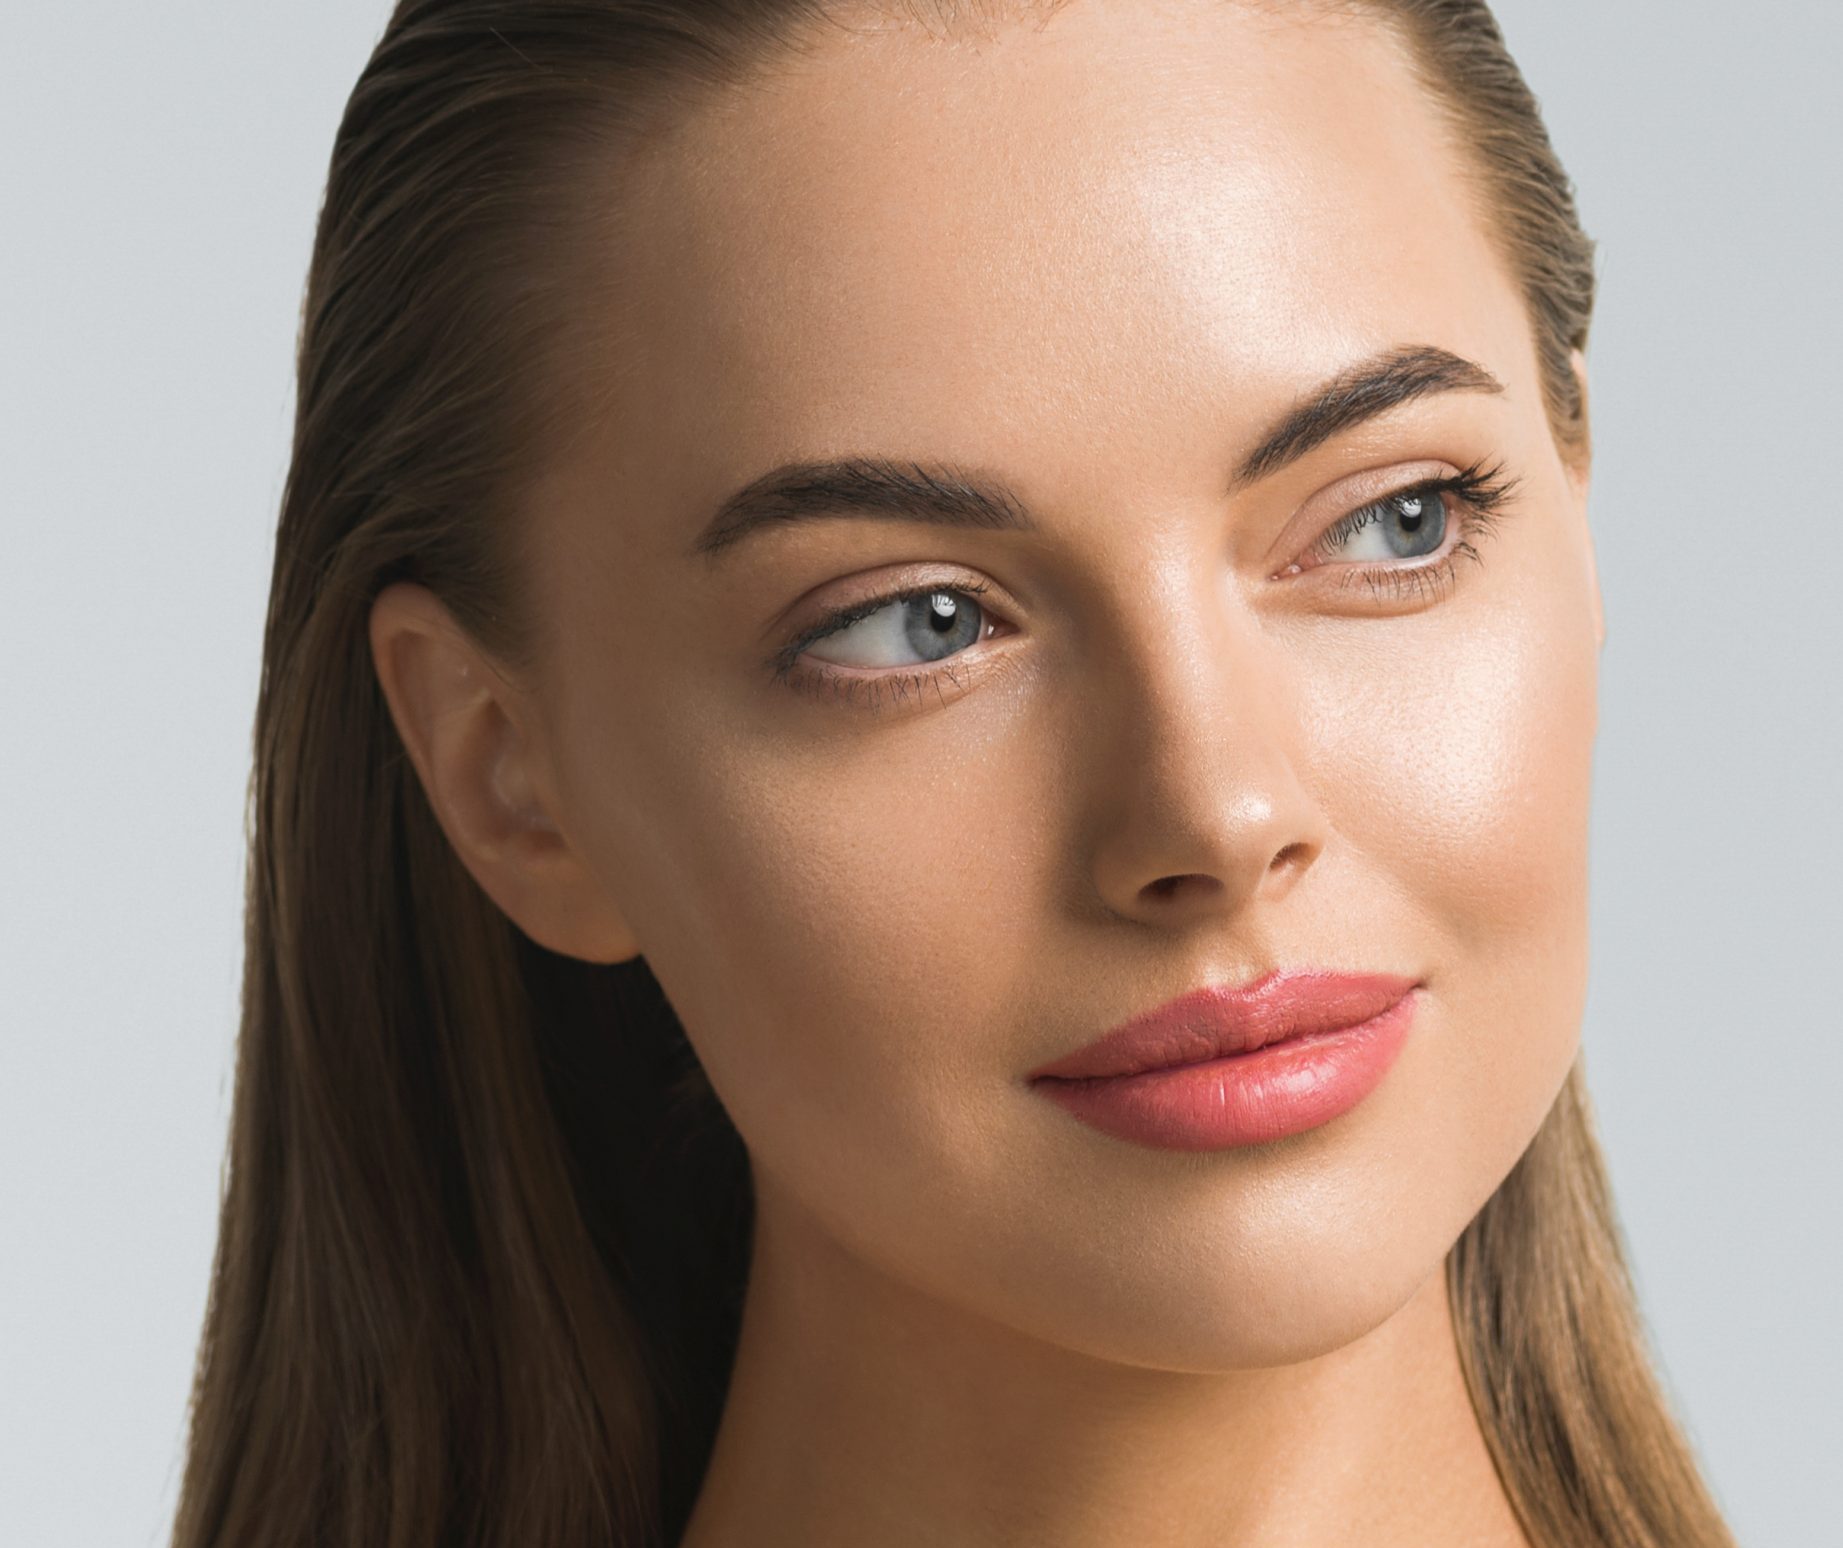 Beautiful Eyes Lips Woman Cosmetic Concept Portrai 2021 08 28 01 55 46 Utc Scaled E1636107834351